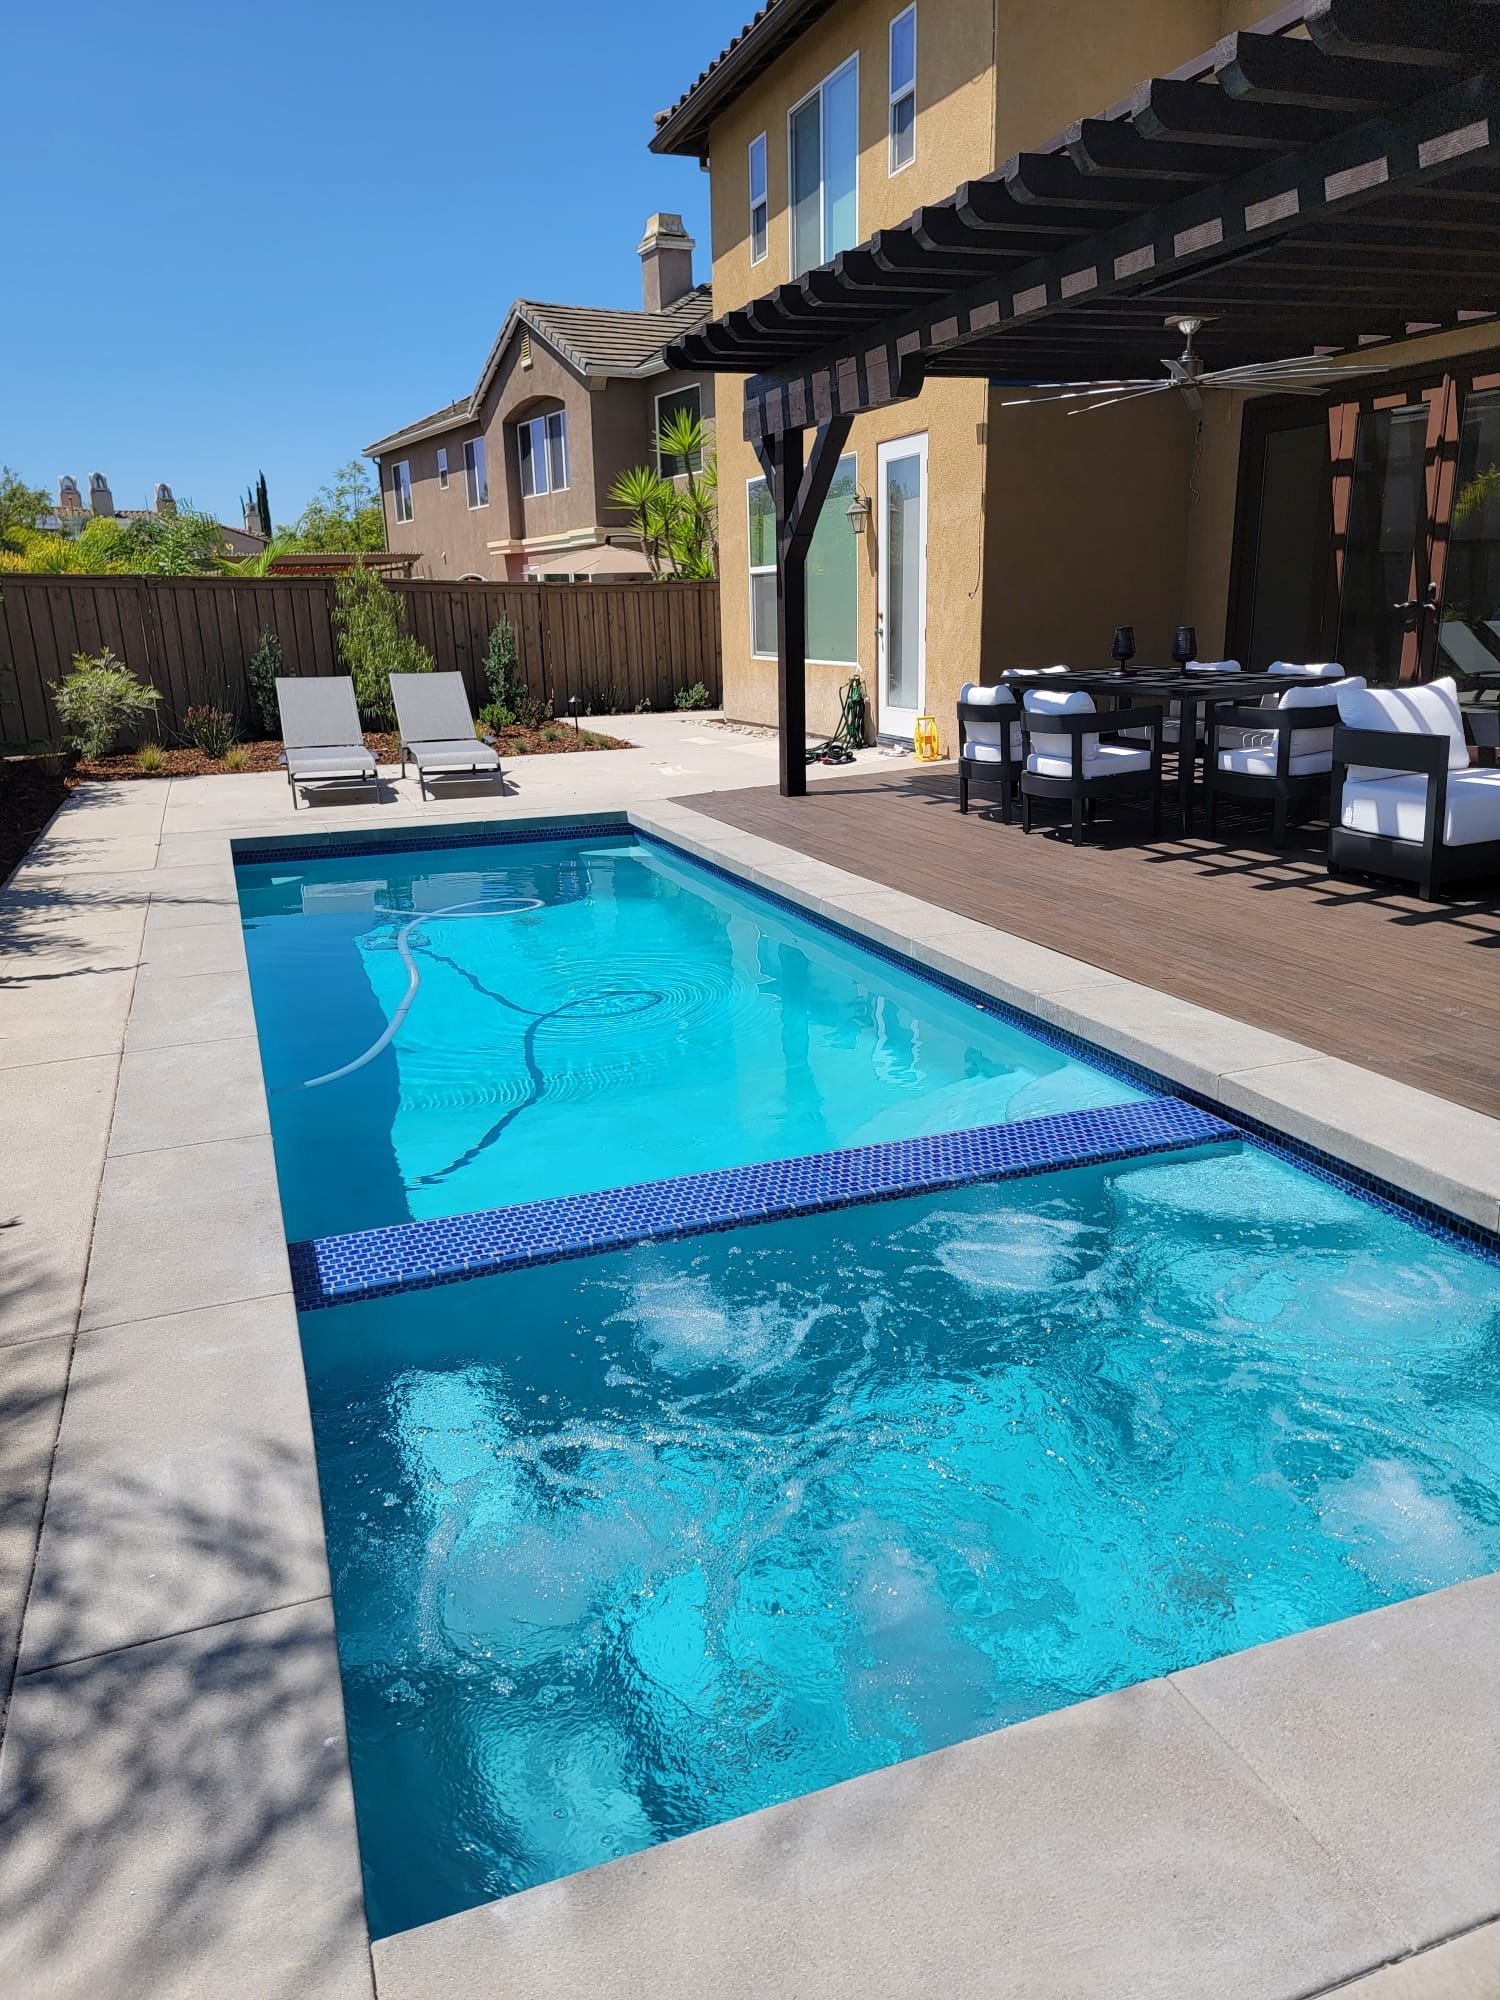 Pool design and Installation  - Chula Vista, California (Copy)